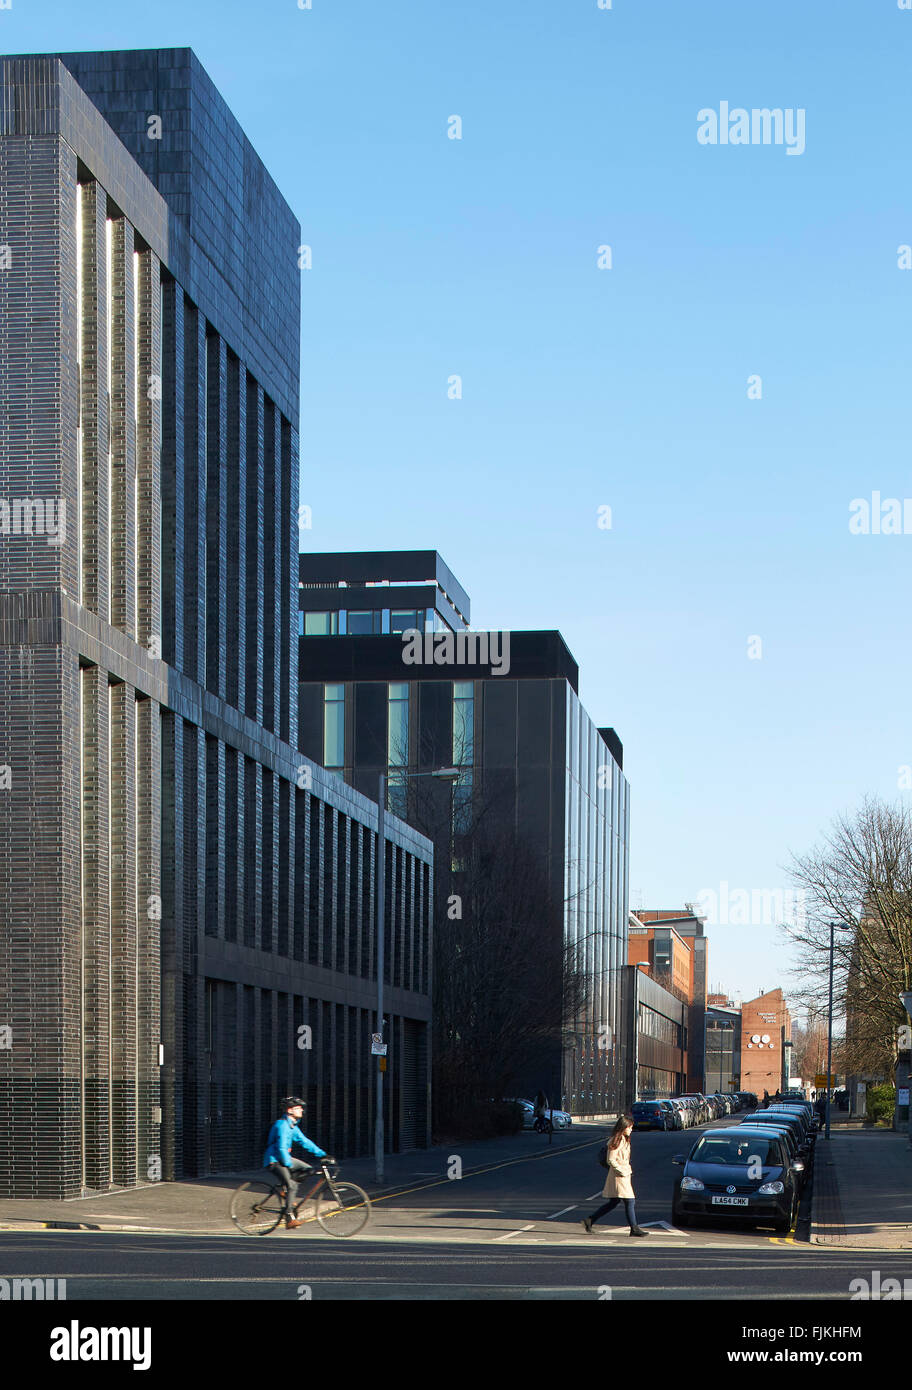 Street elevation with black brick facade. MMU Student Union, Manchester, United Kingdom. Architect: Feilden Clegg Bradley Studio Stock Photo